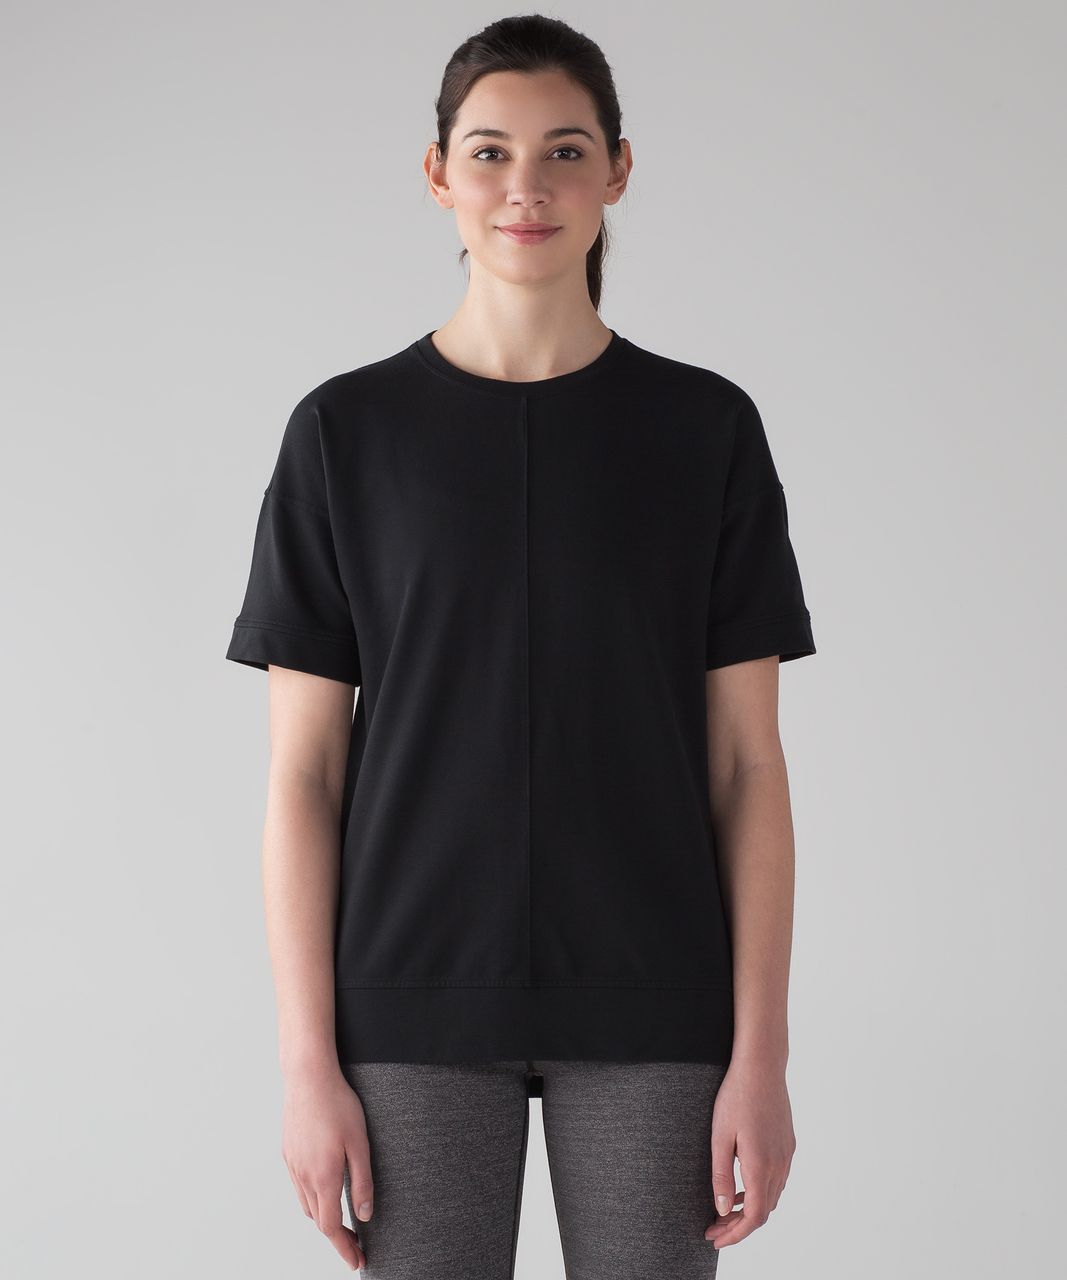 lululemon black t shirt,OFF 78%,nalan 